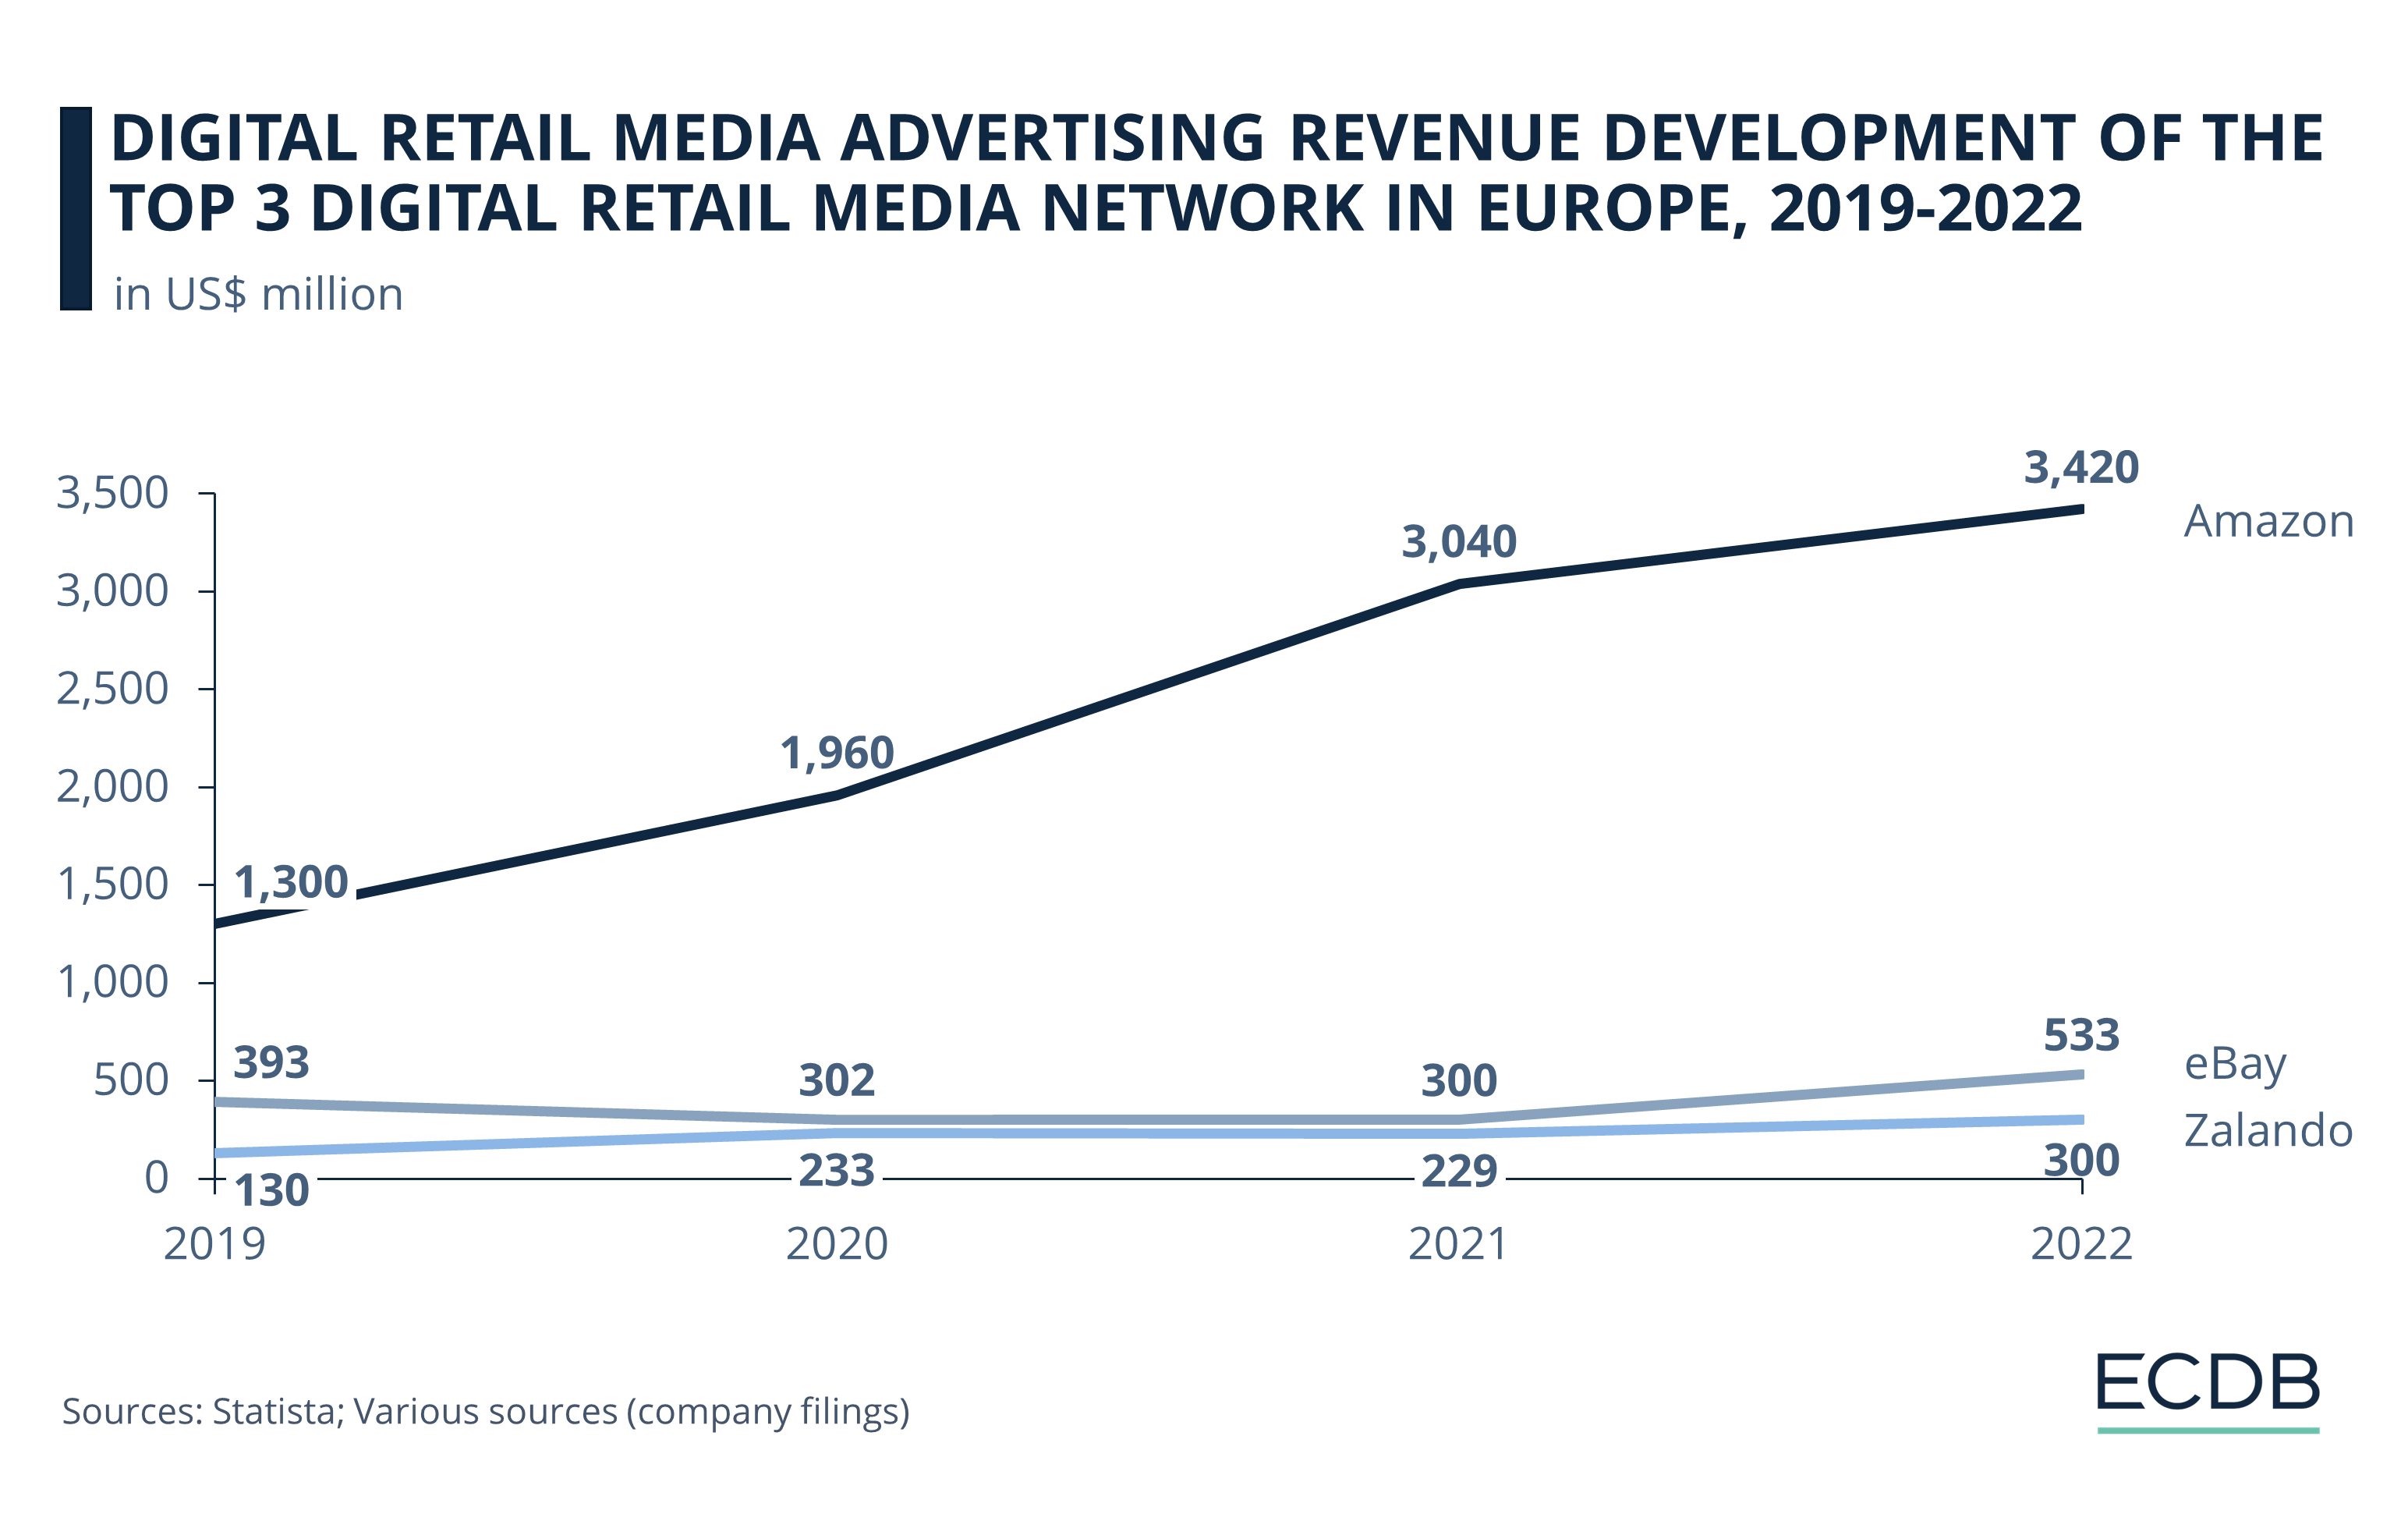 Digital Retail Media Advertising Revenue Development of the Top 3 Retail Media Networks in Europe, 2019-2022